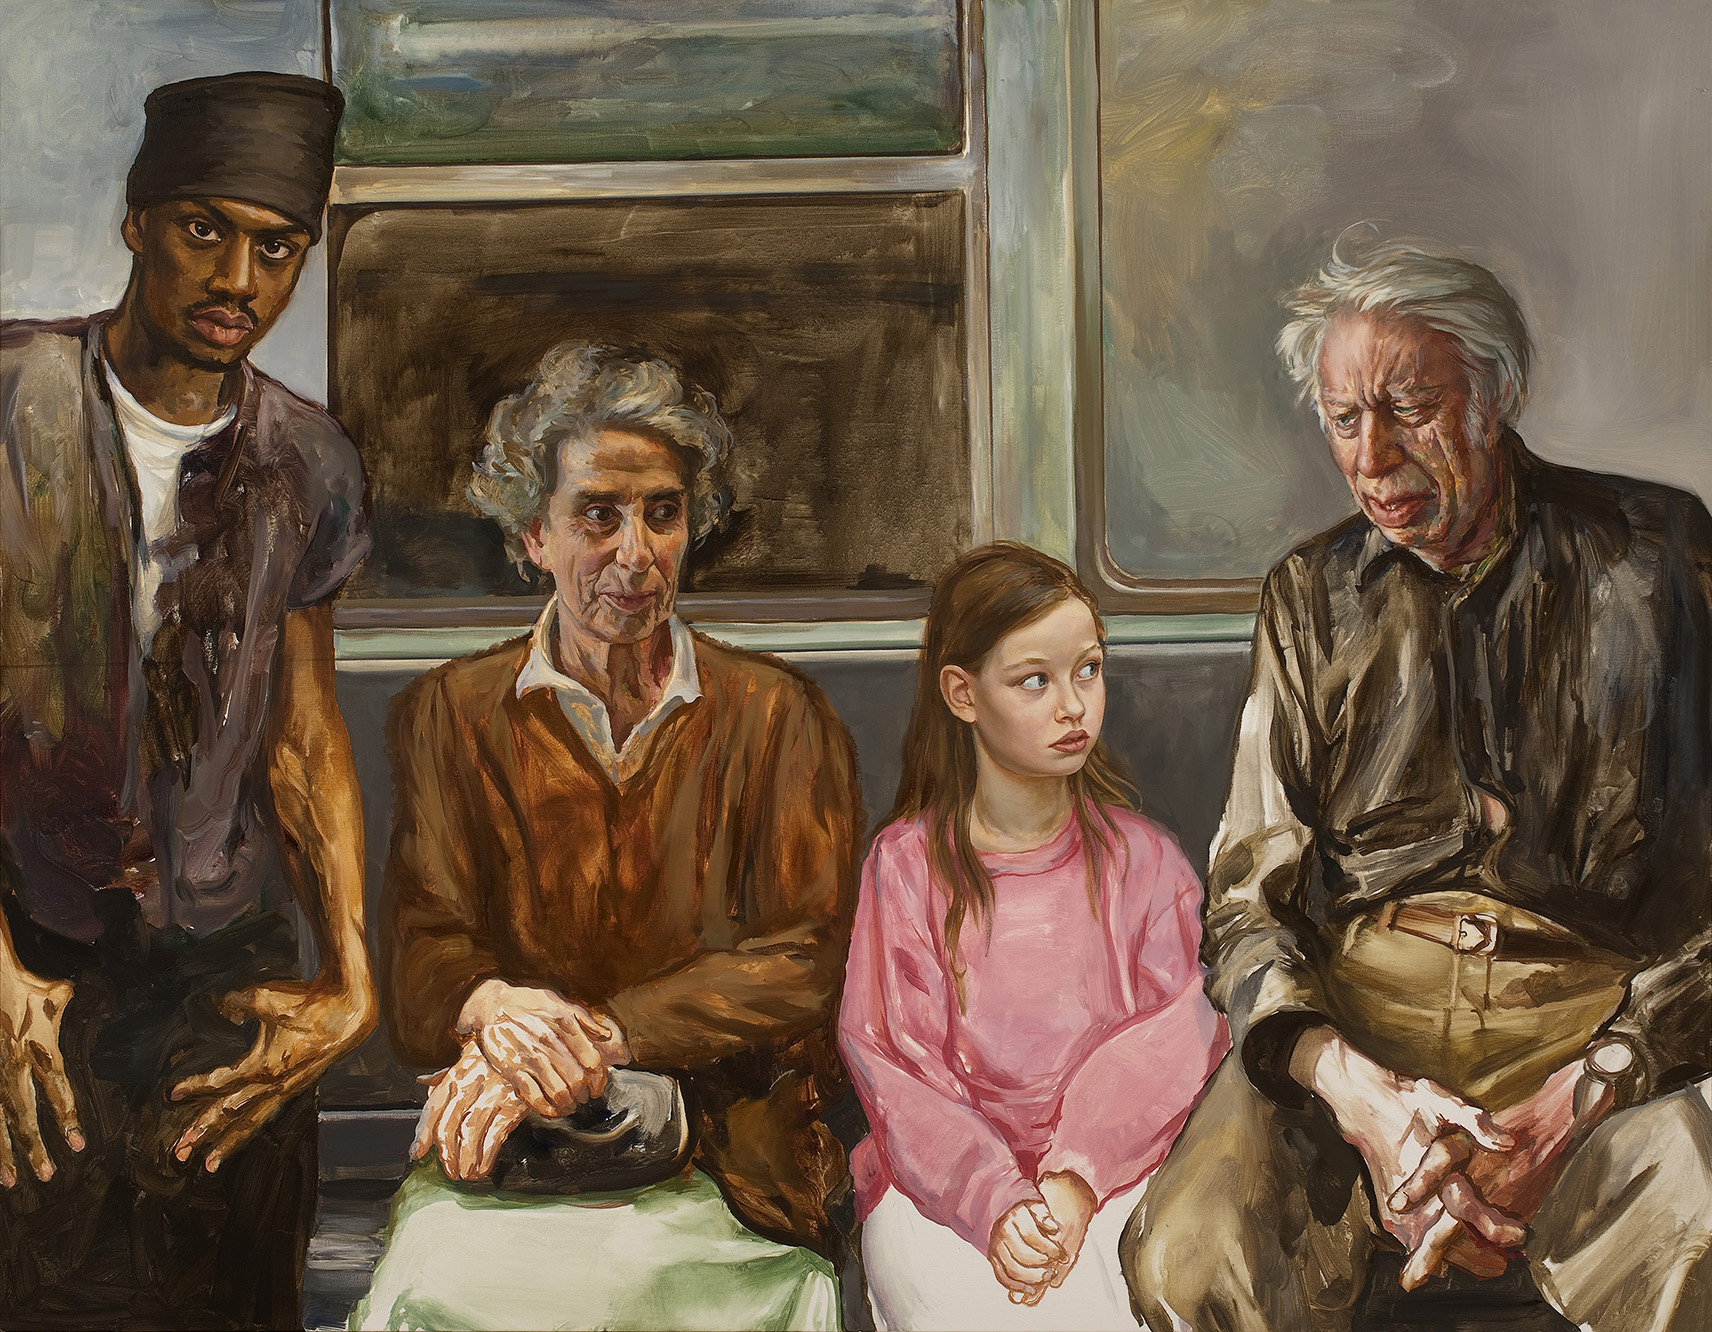  Passengers; oil on canvas, 50 x 64